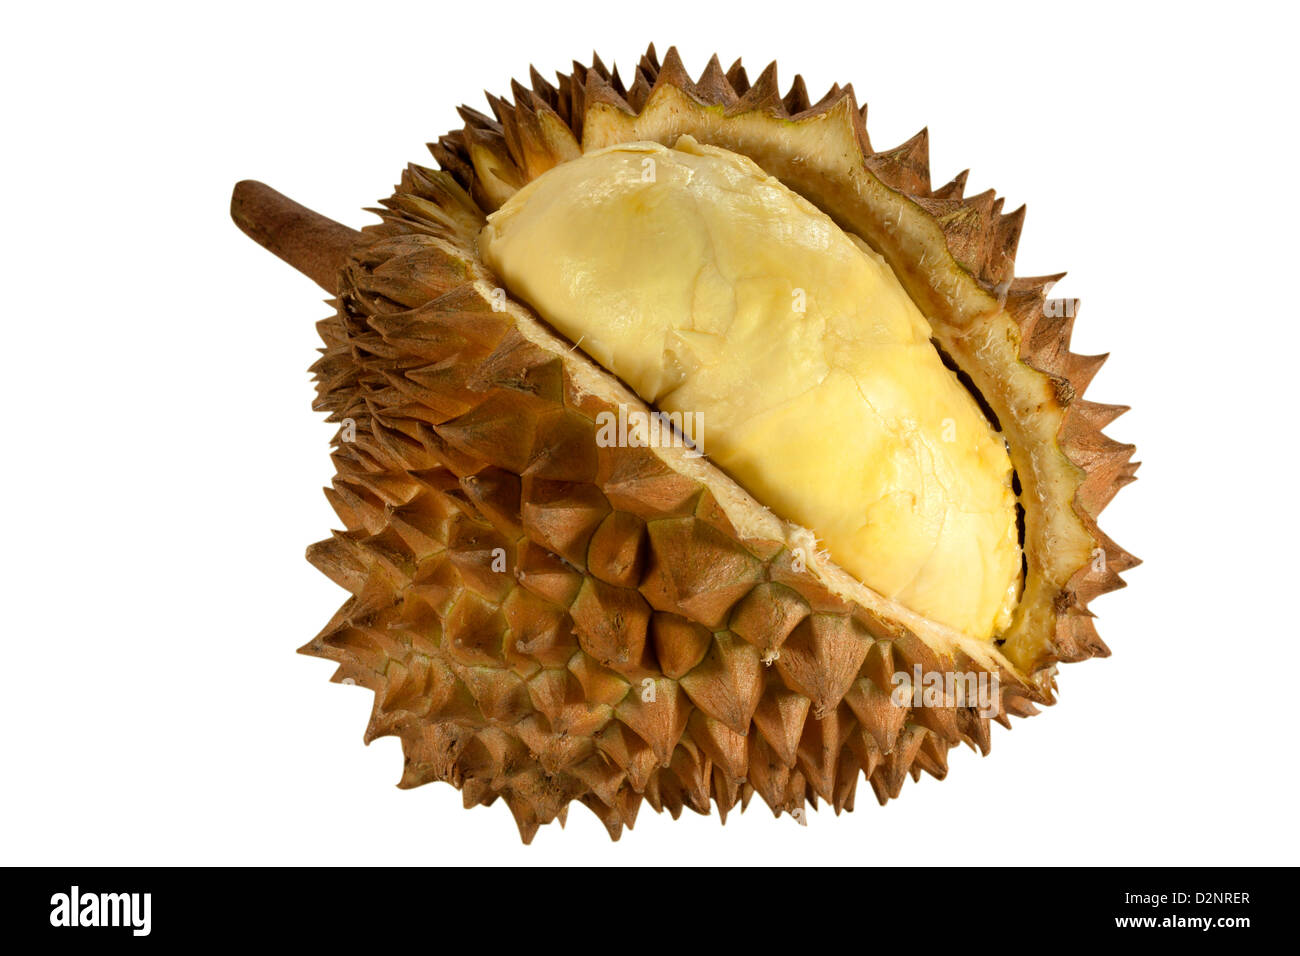 Durian Frucht riecht süß mit hohen Kohlenhydrate. Stockfoto